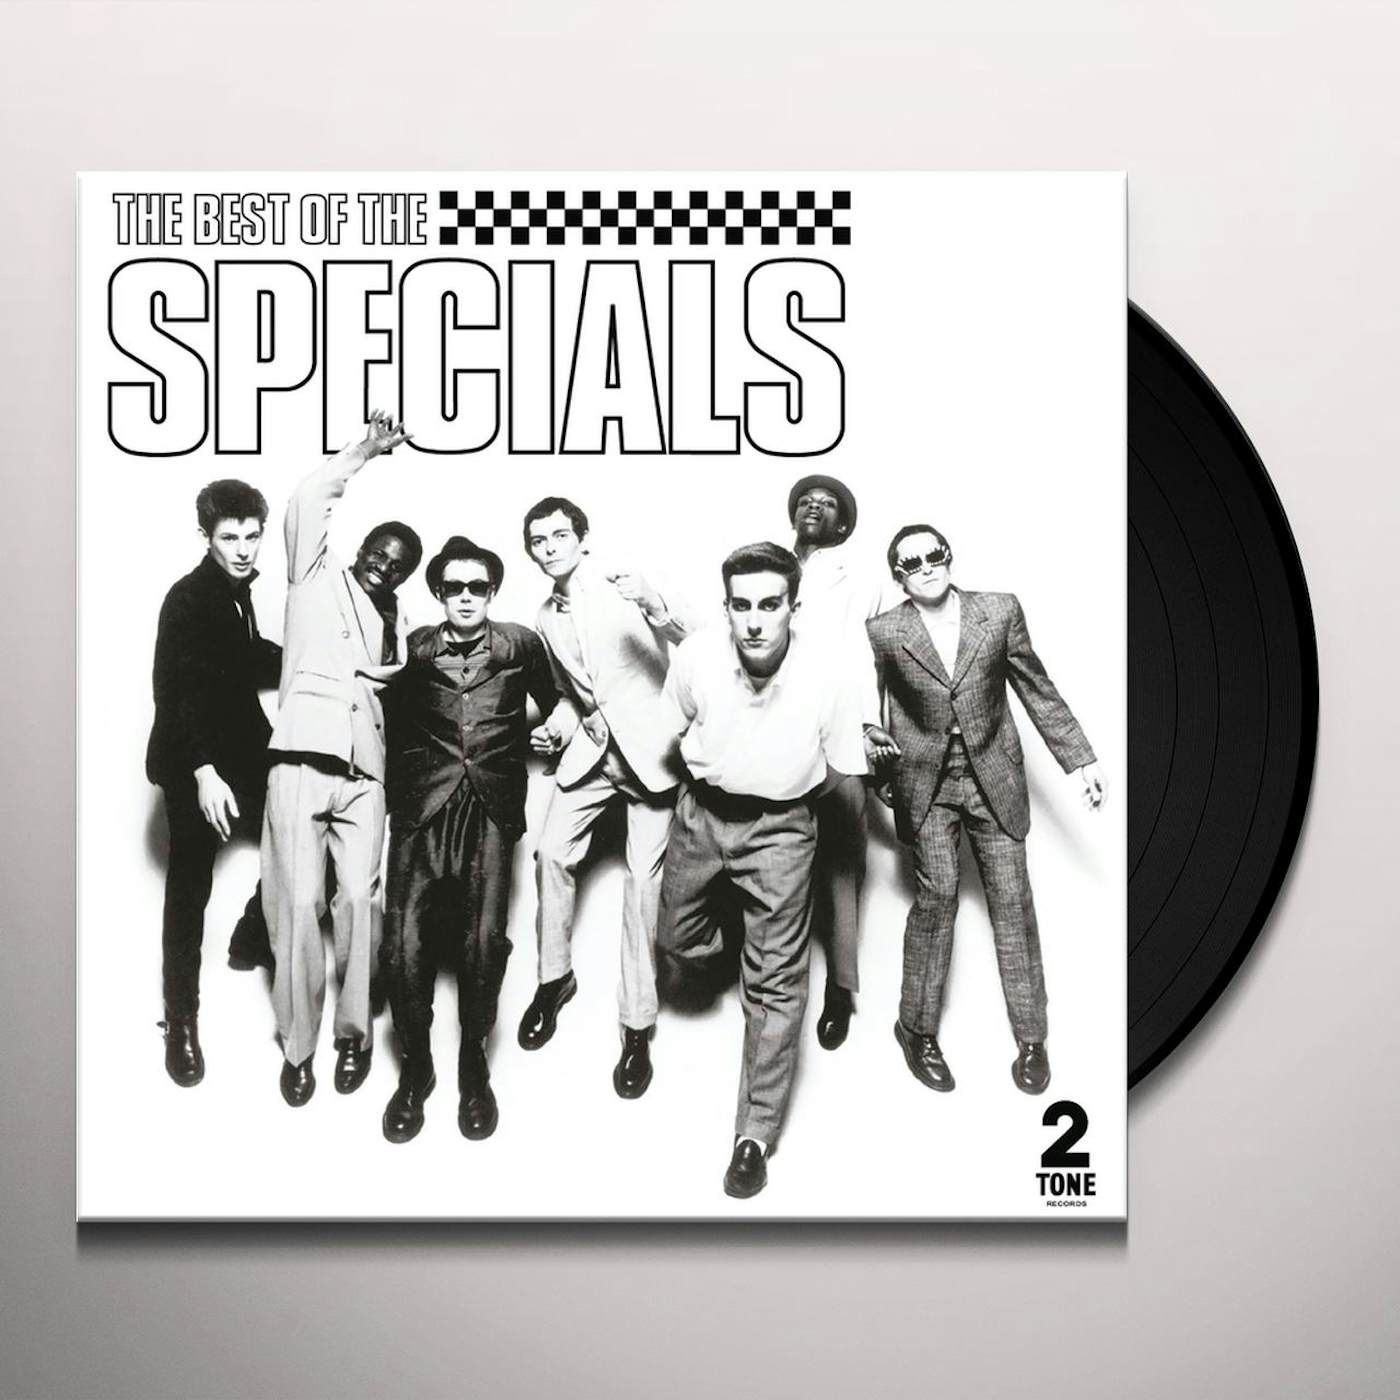 BEST OF THE SPECIALS Vinyl Record